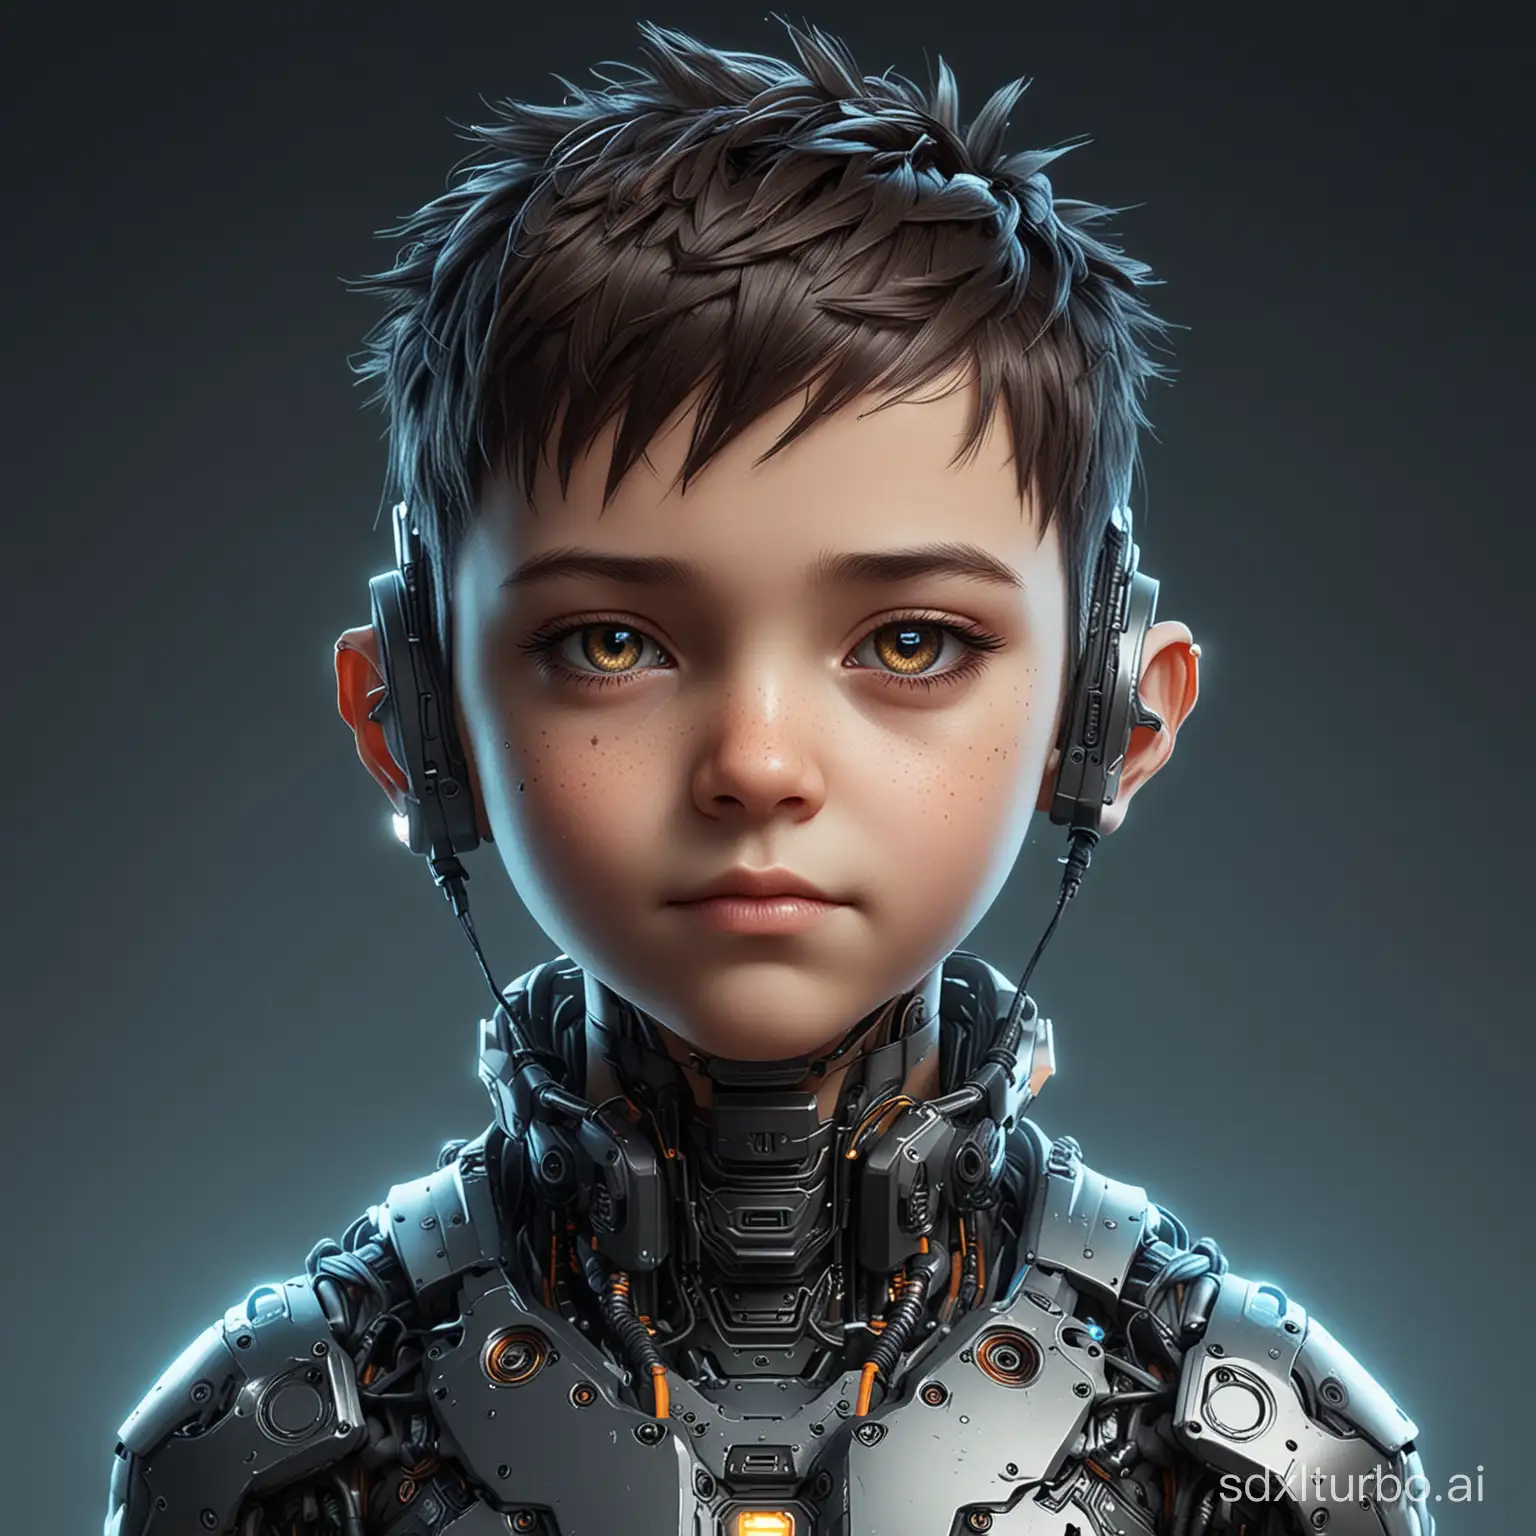 little boy, Cyberpunk style robot avatar, digital style, high quality